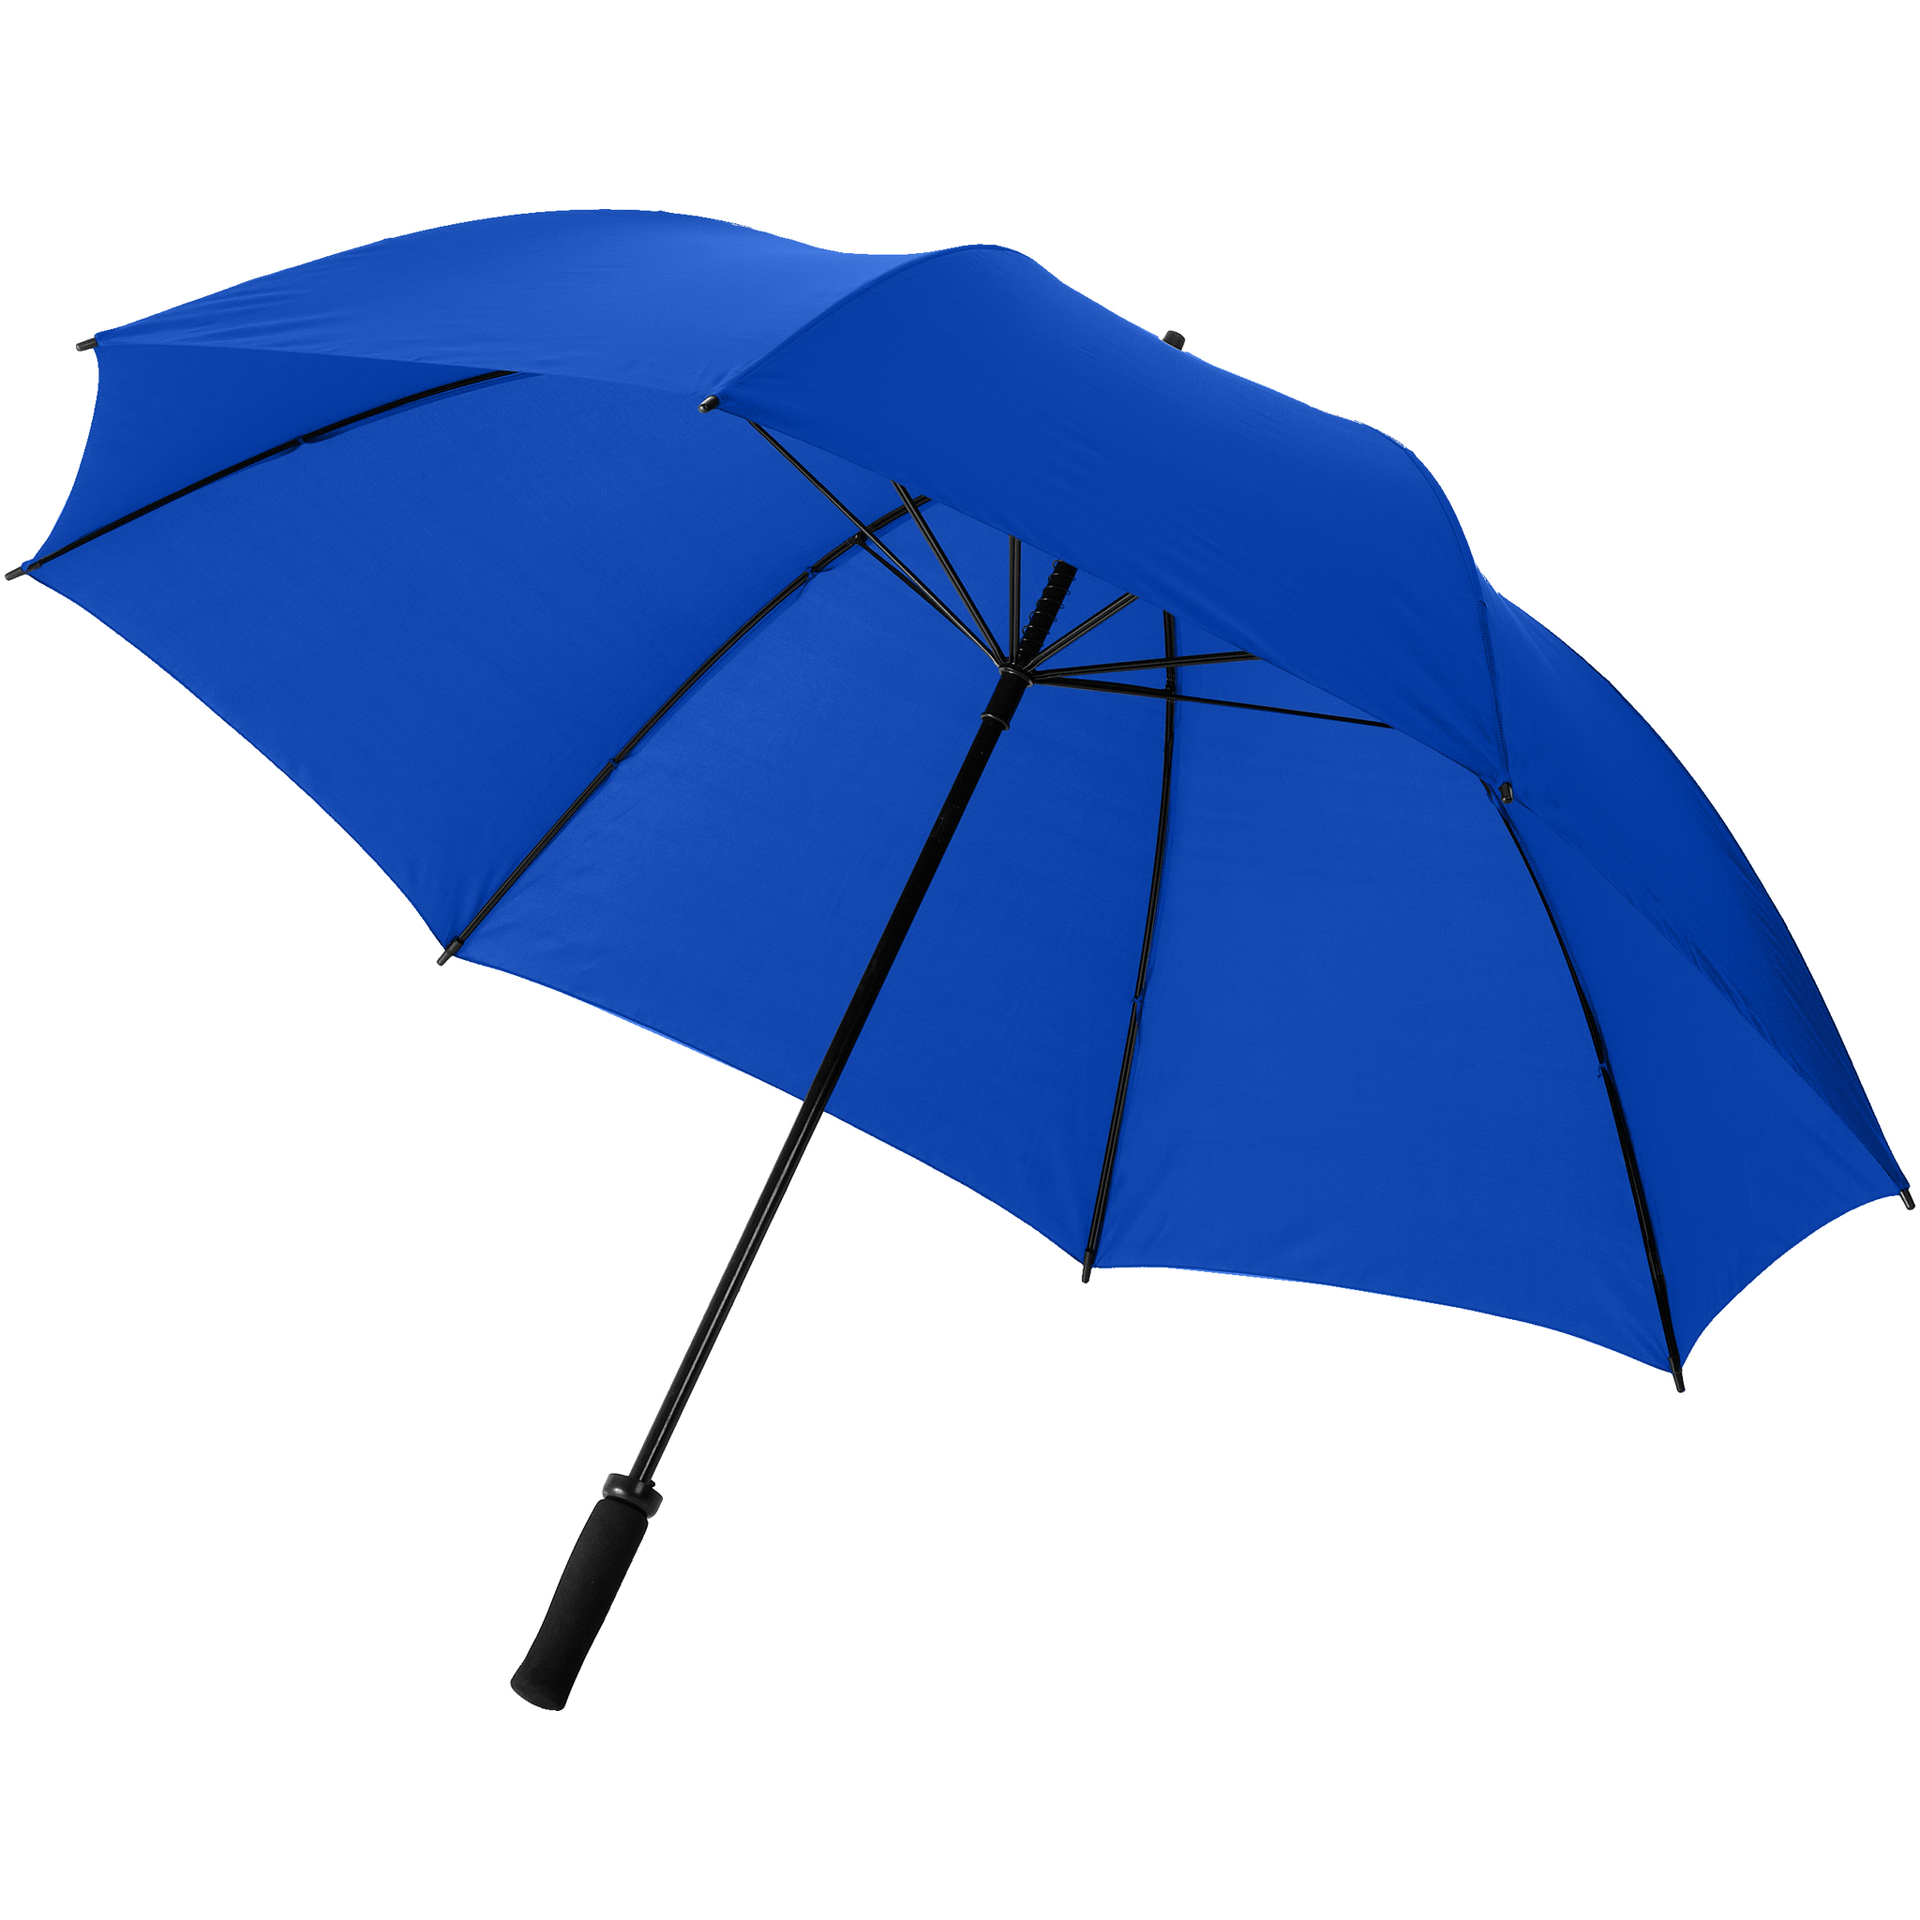 Storm Umbrella in blue